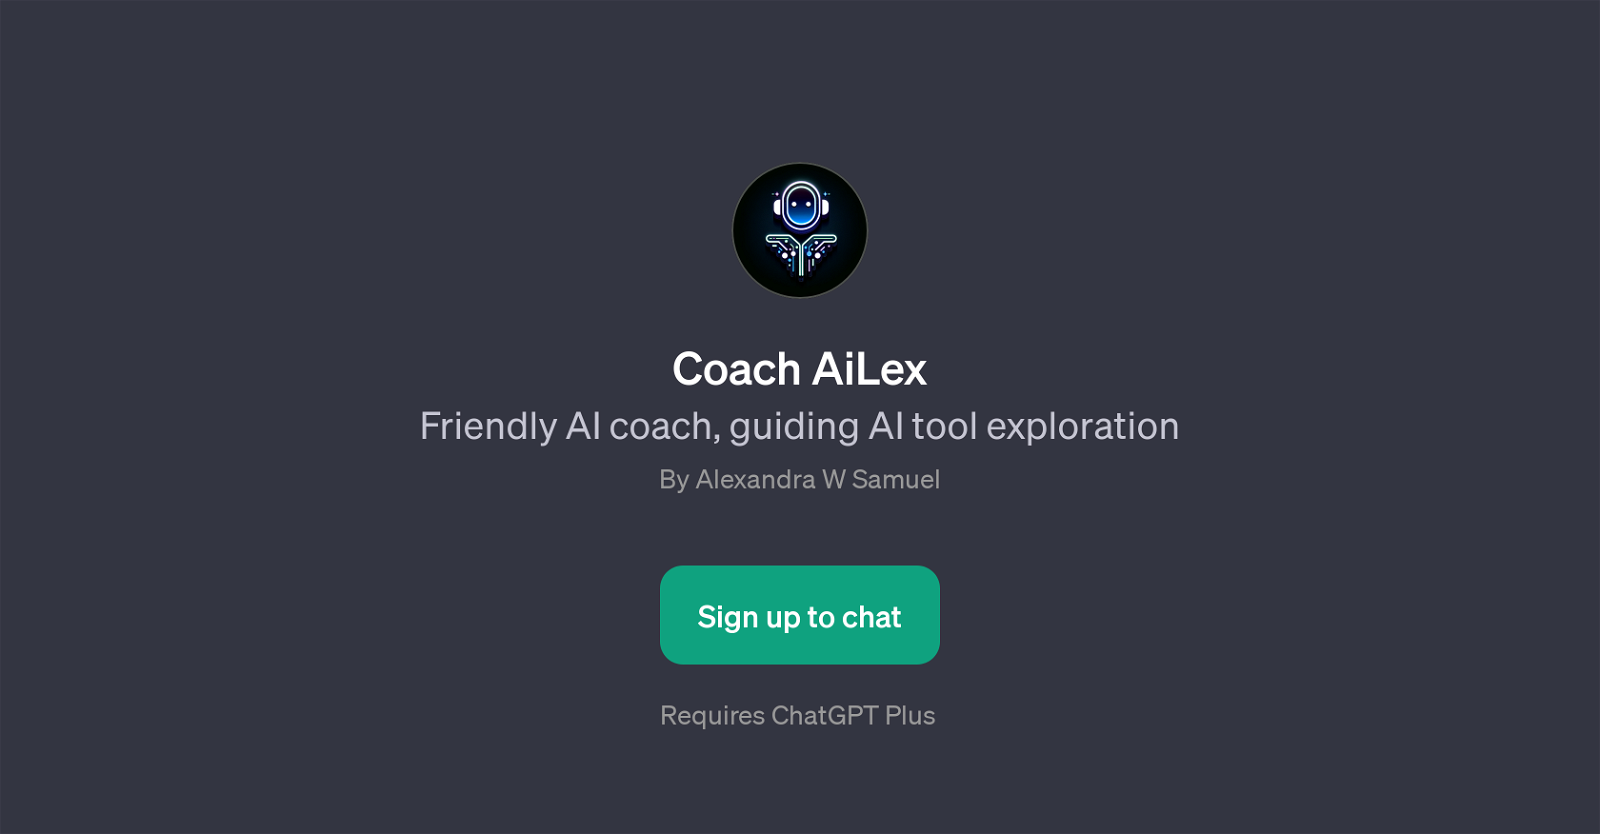 Coach AiLex website